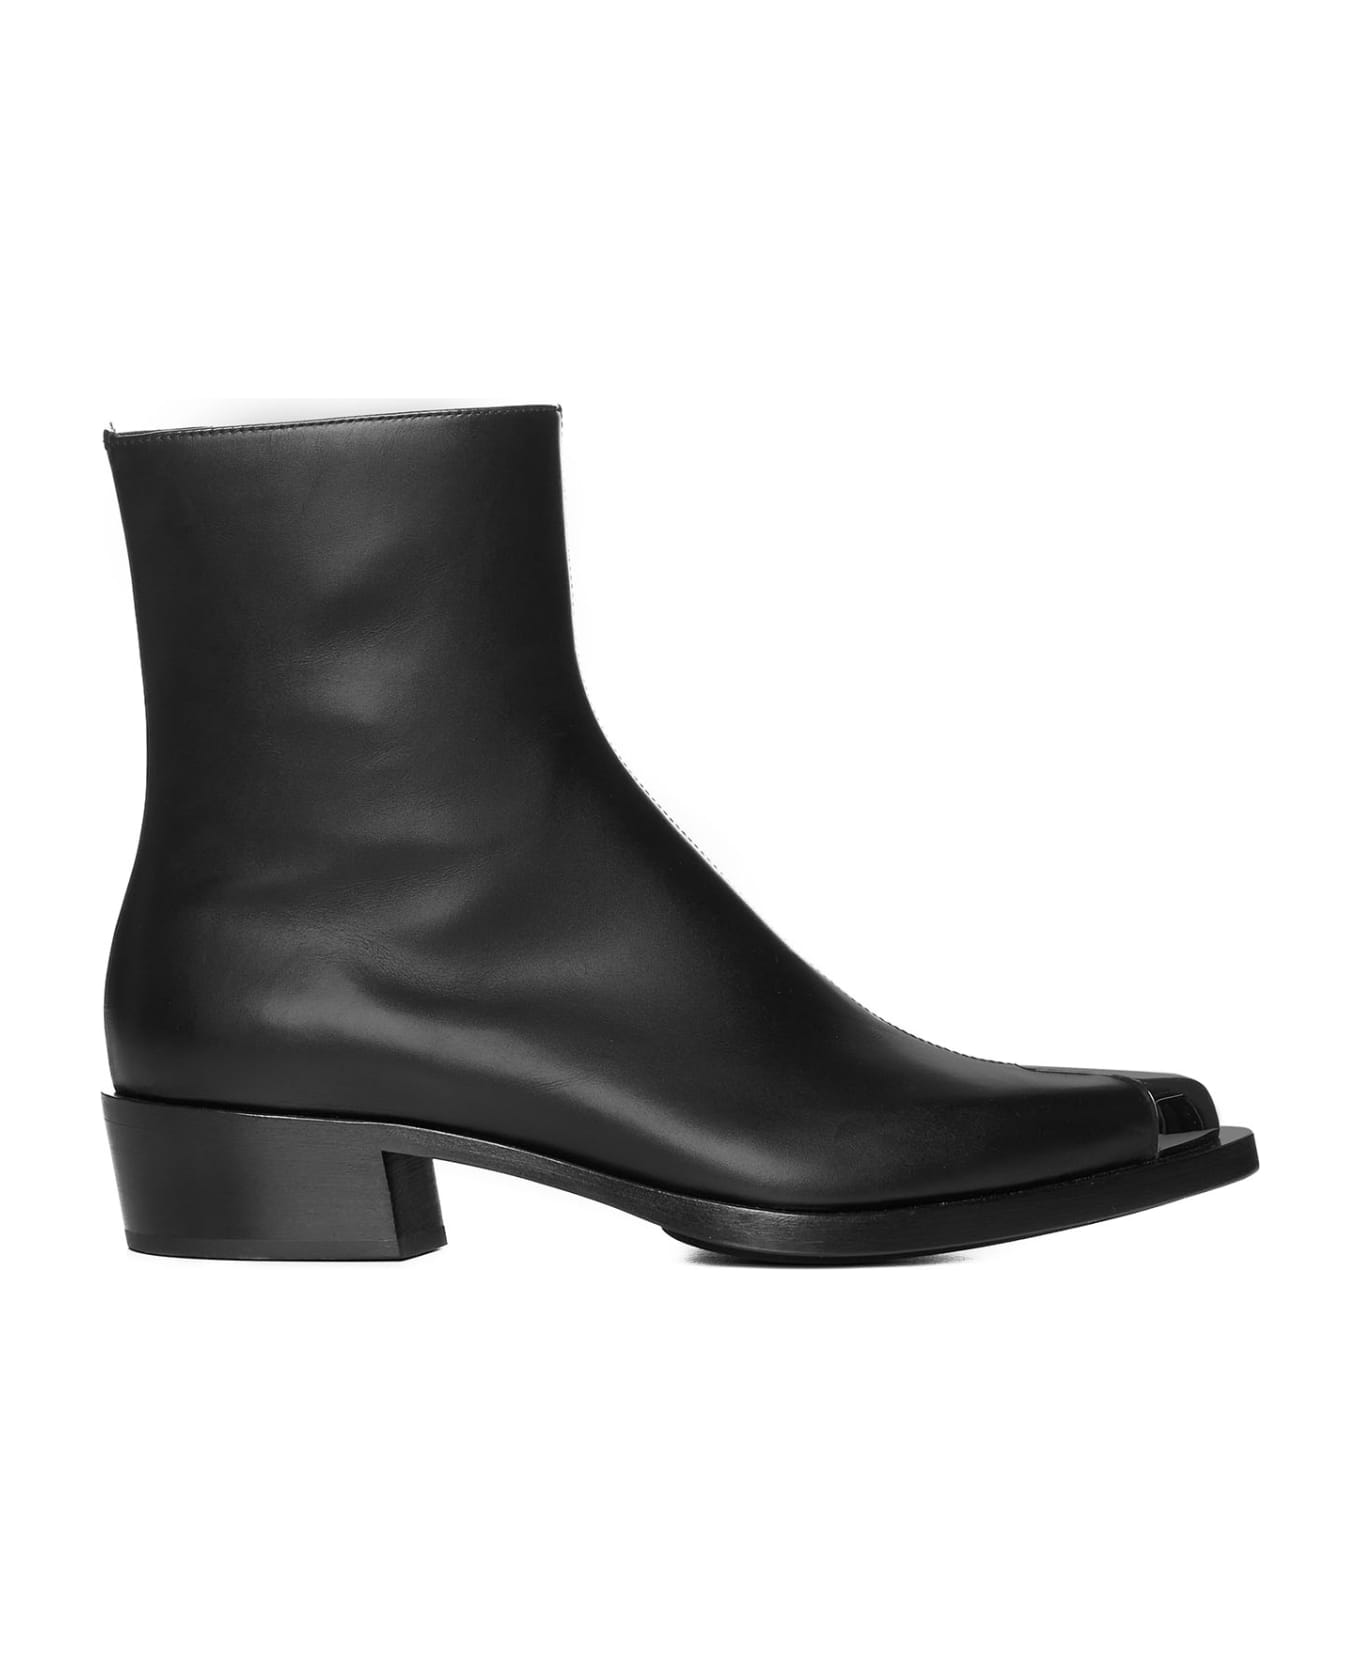 Alexander McQueen Metal Toe Side Zipped Boots - Nero argento ブーツ